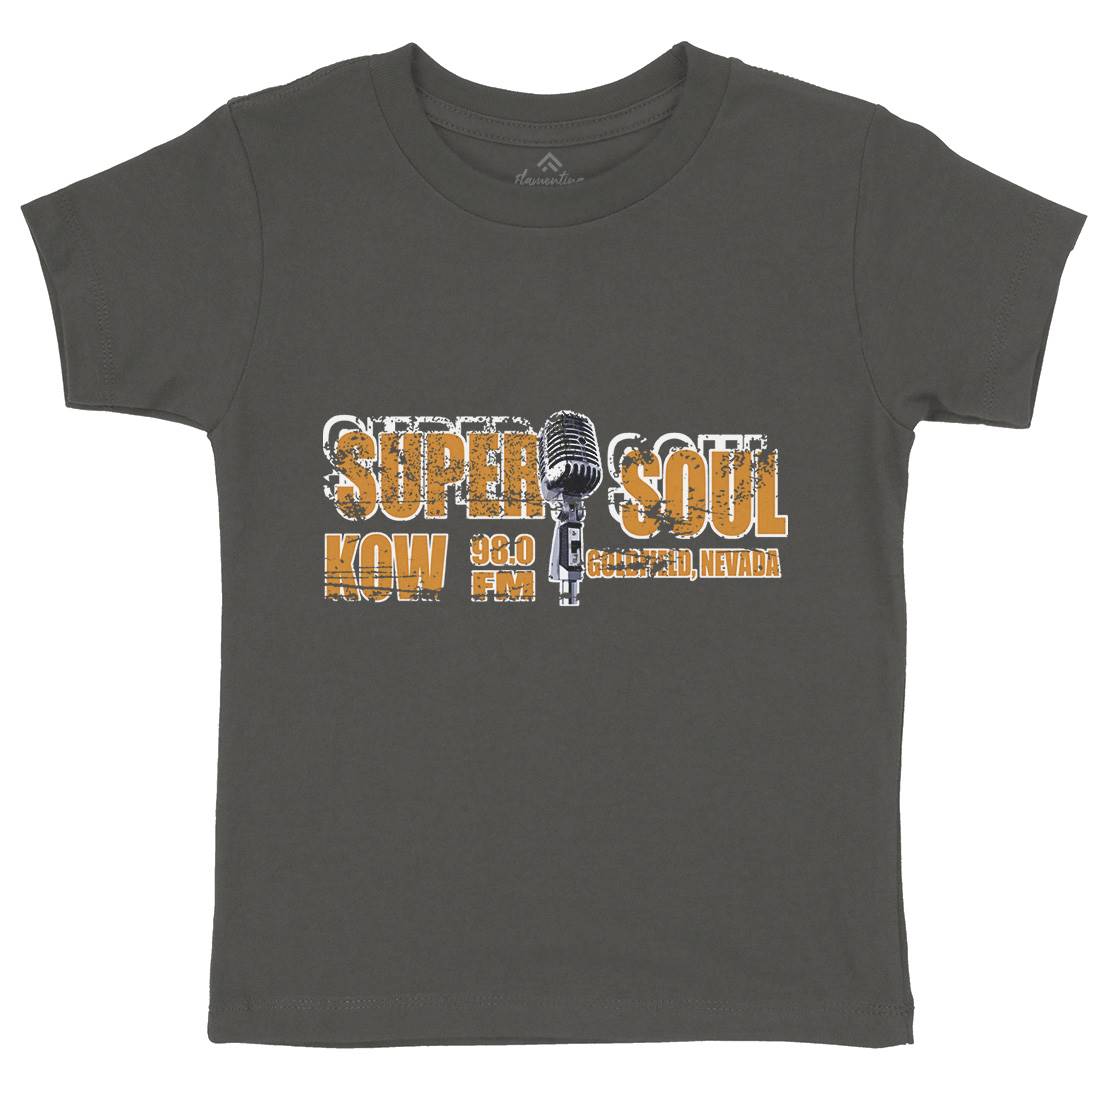 Super Soul Kids Crew Neck T-Shirt Music D392